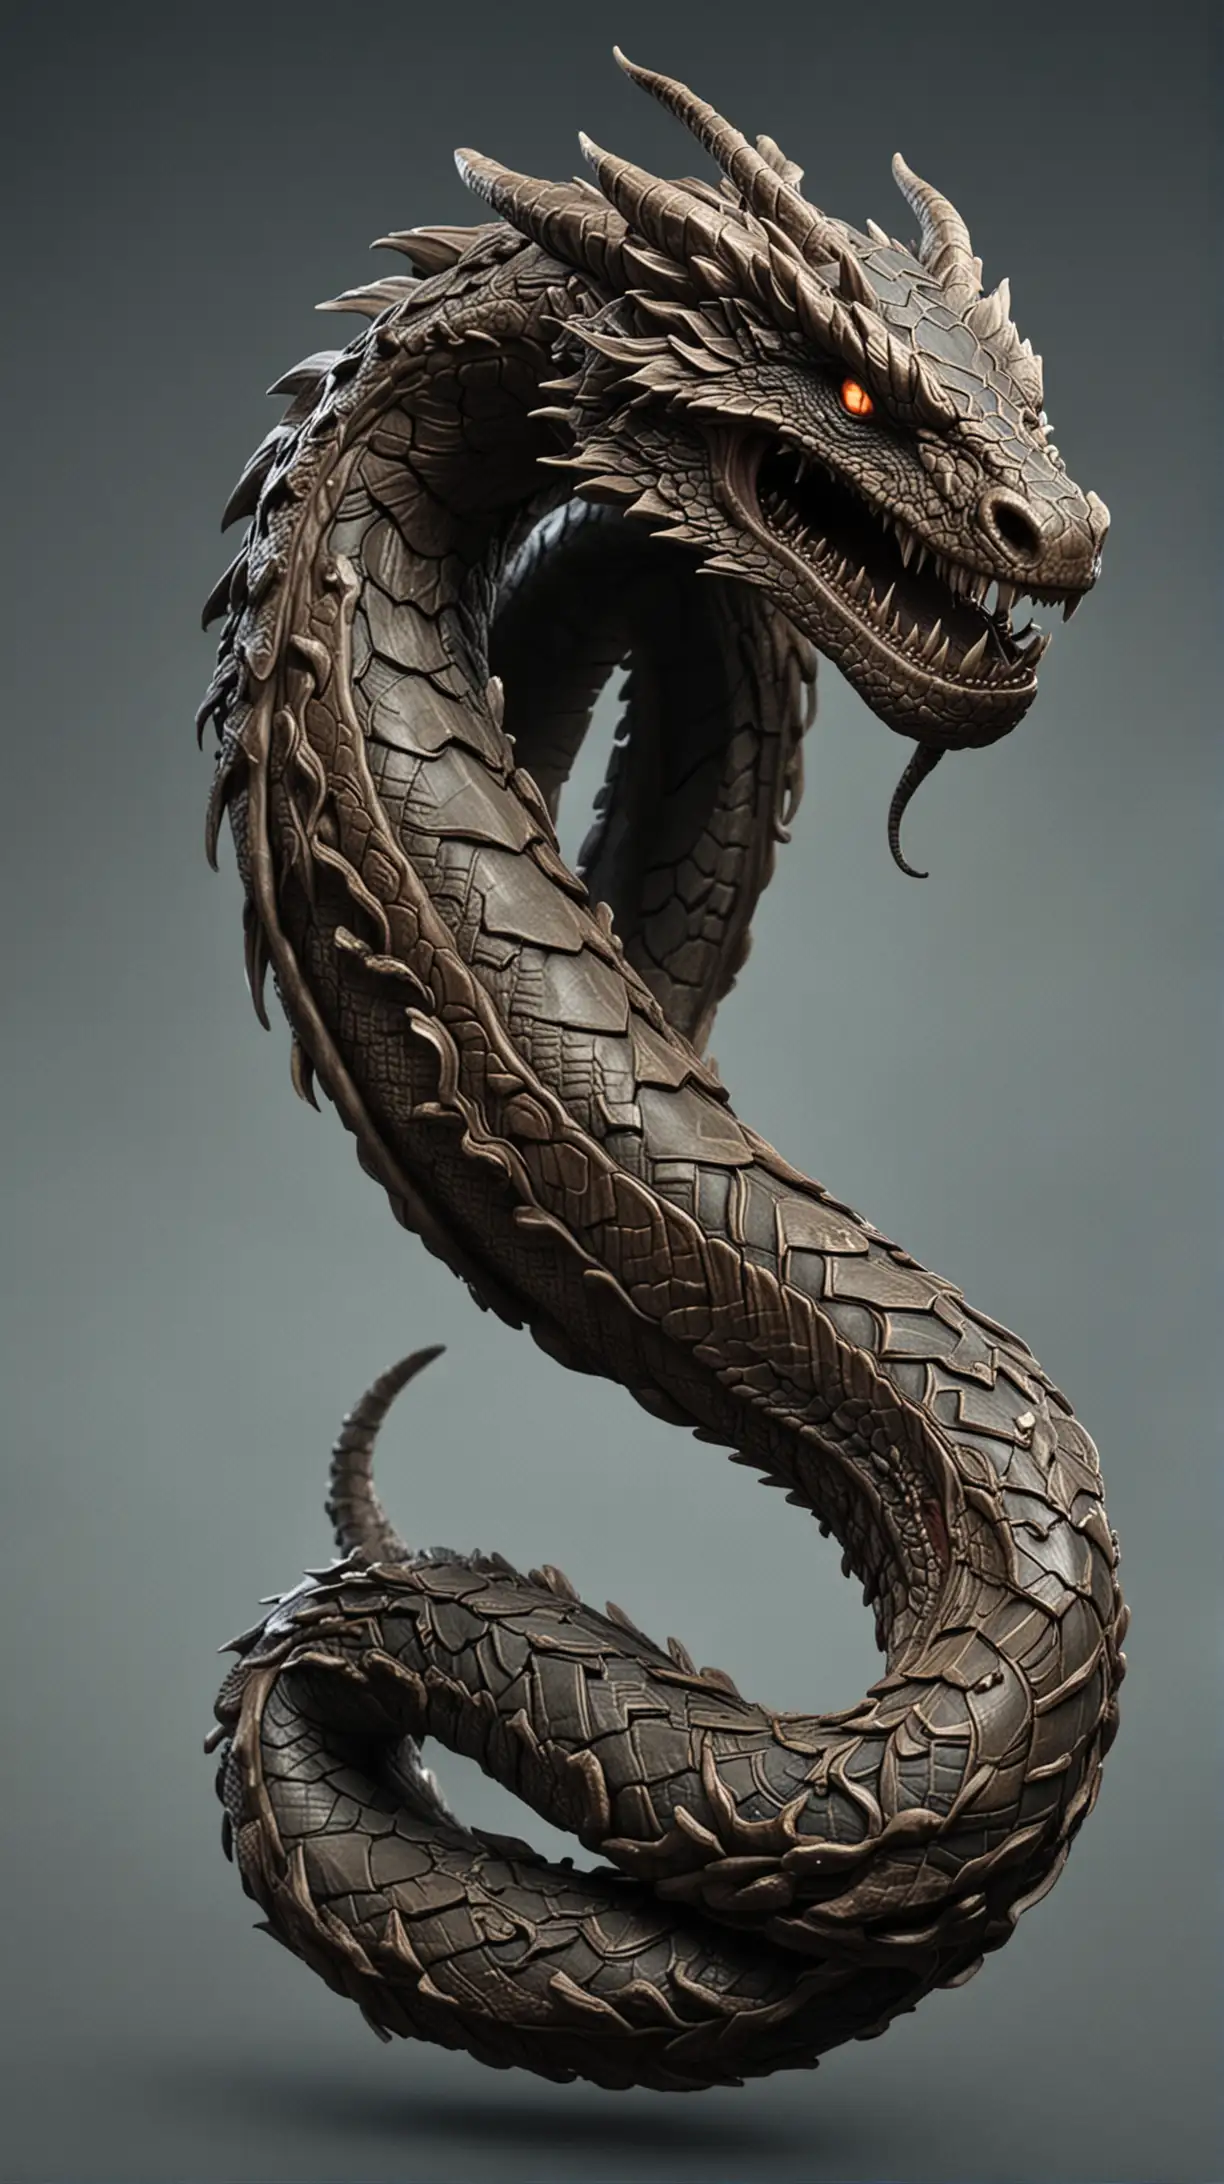 Realistic Midgard Serpent Sculpture Emerging from Ocean Waves